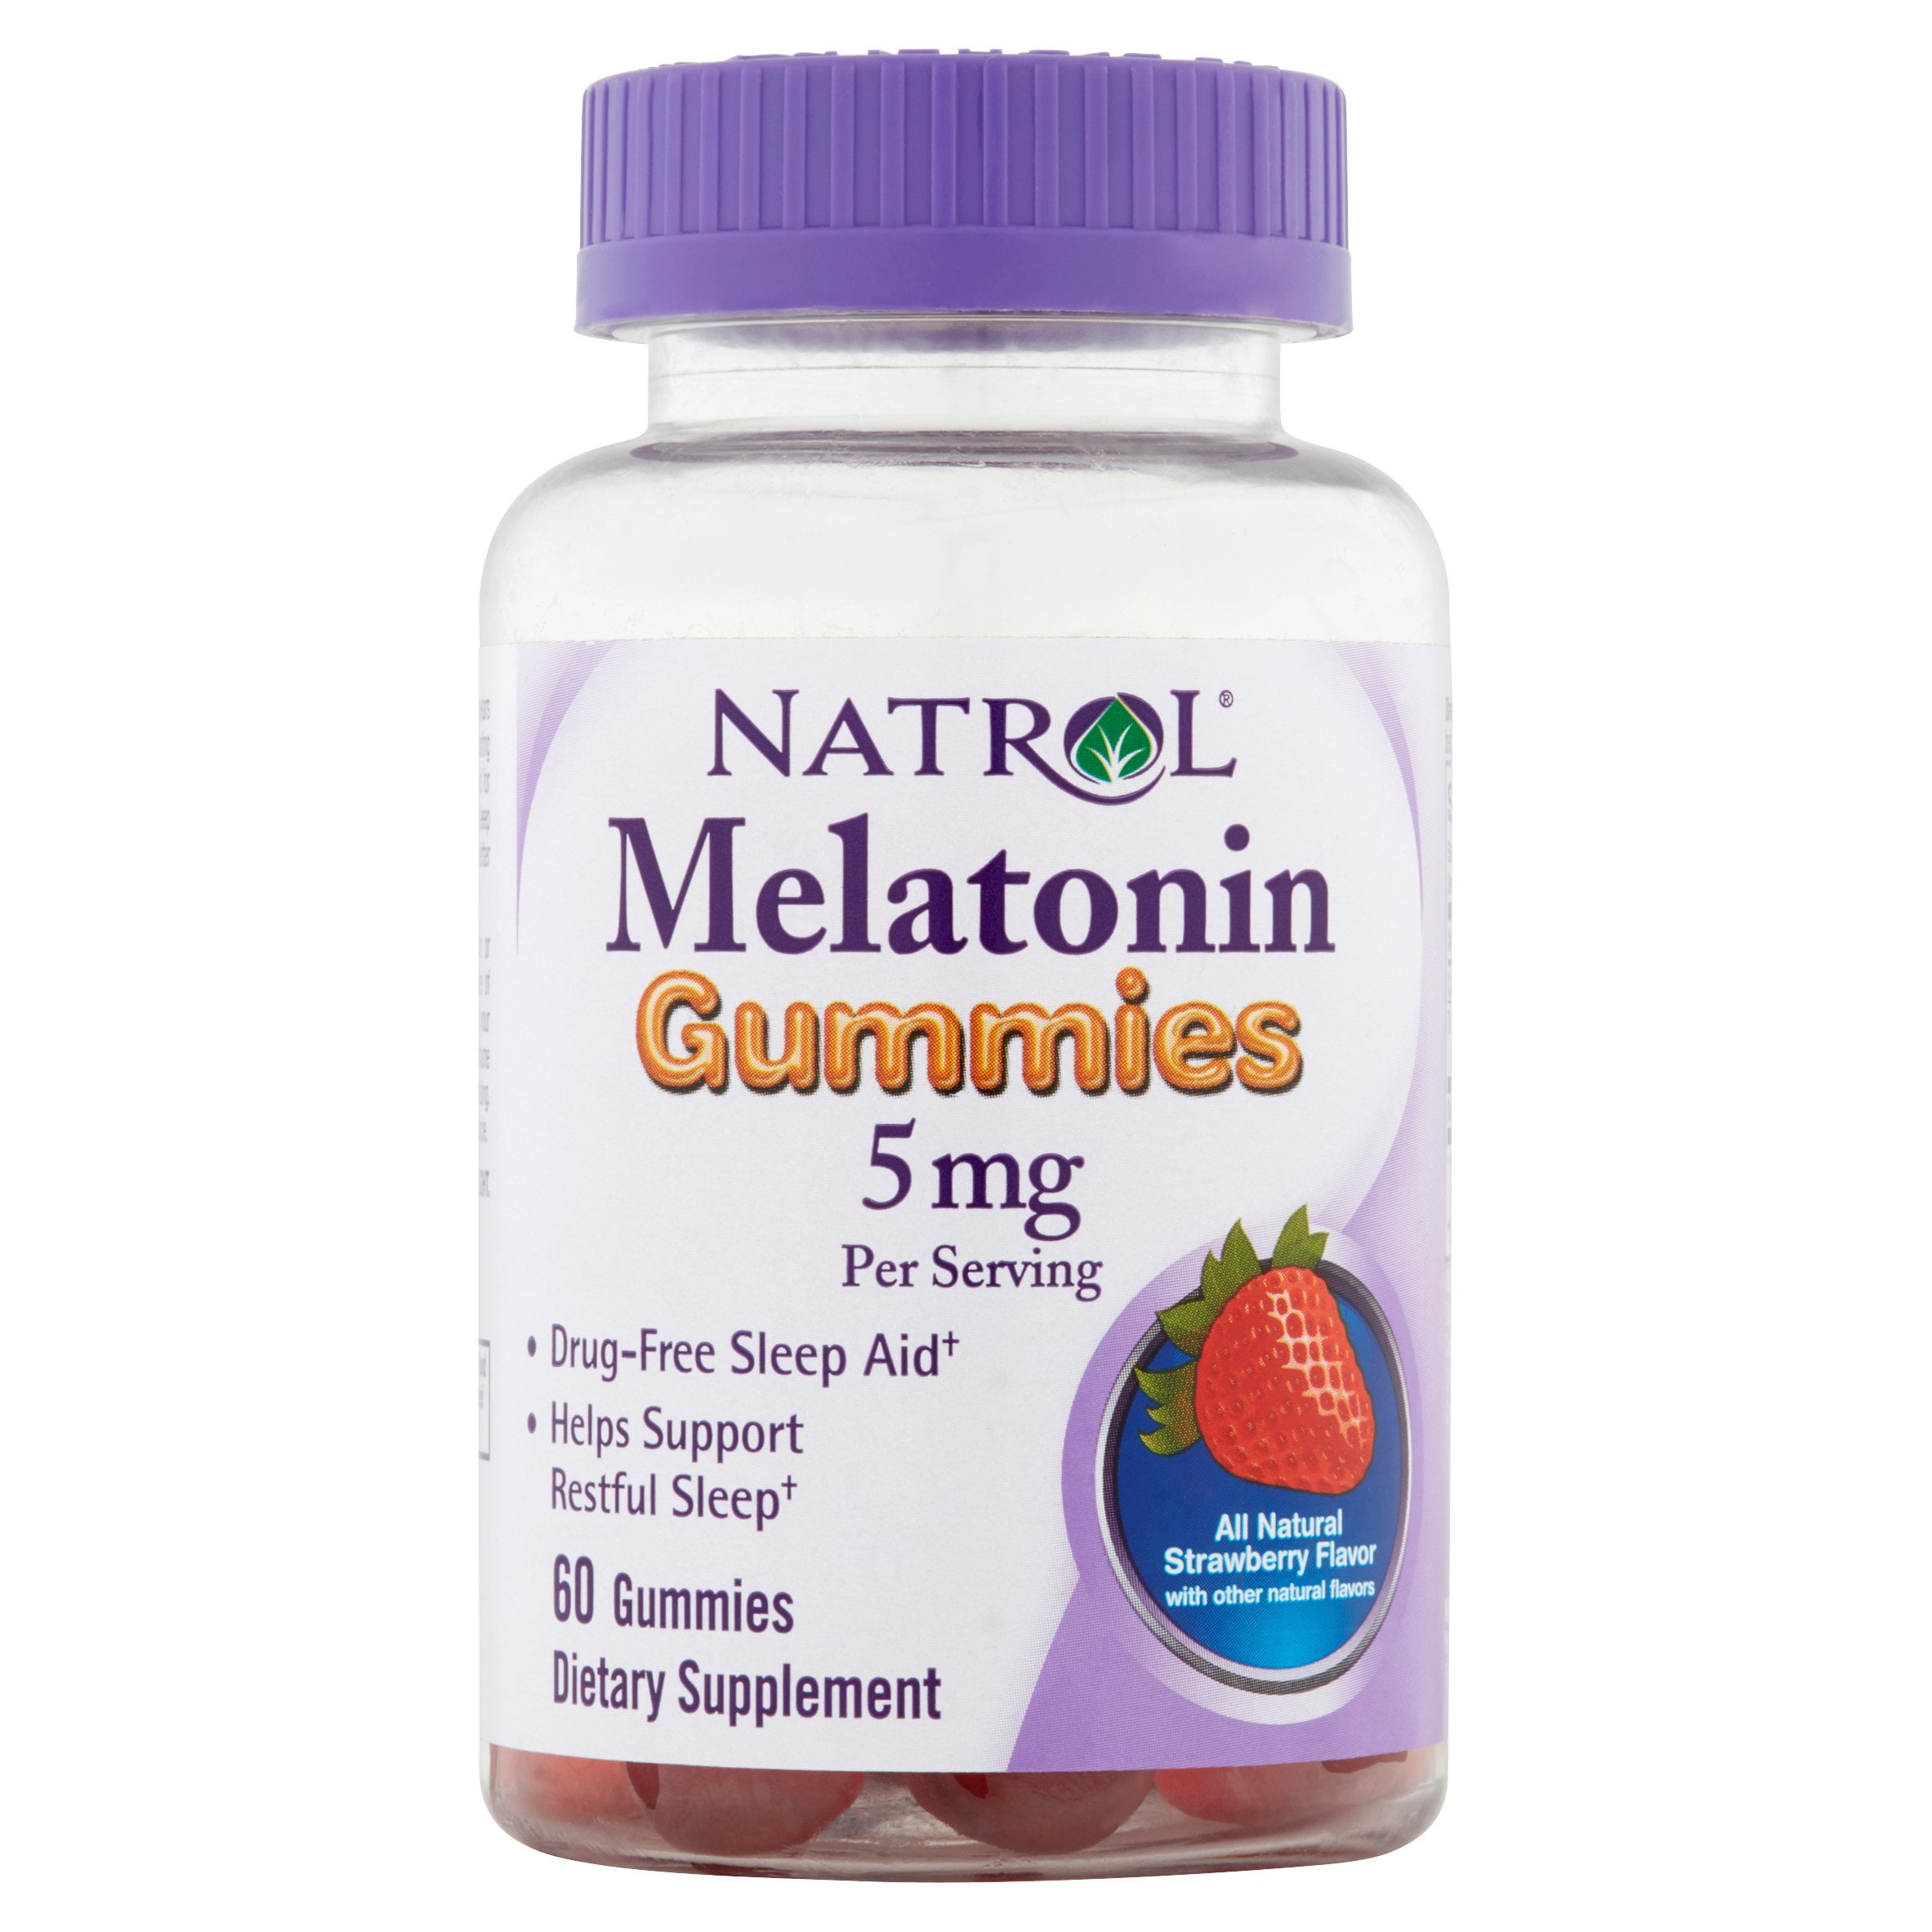 natrol-melatonin-5-mg-gummies-60-count-walmart-walmart